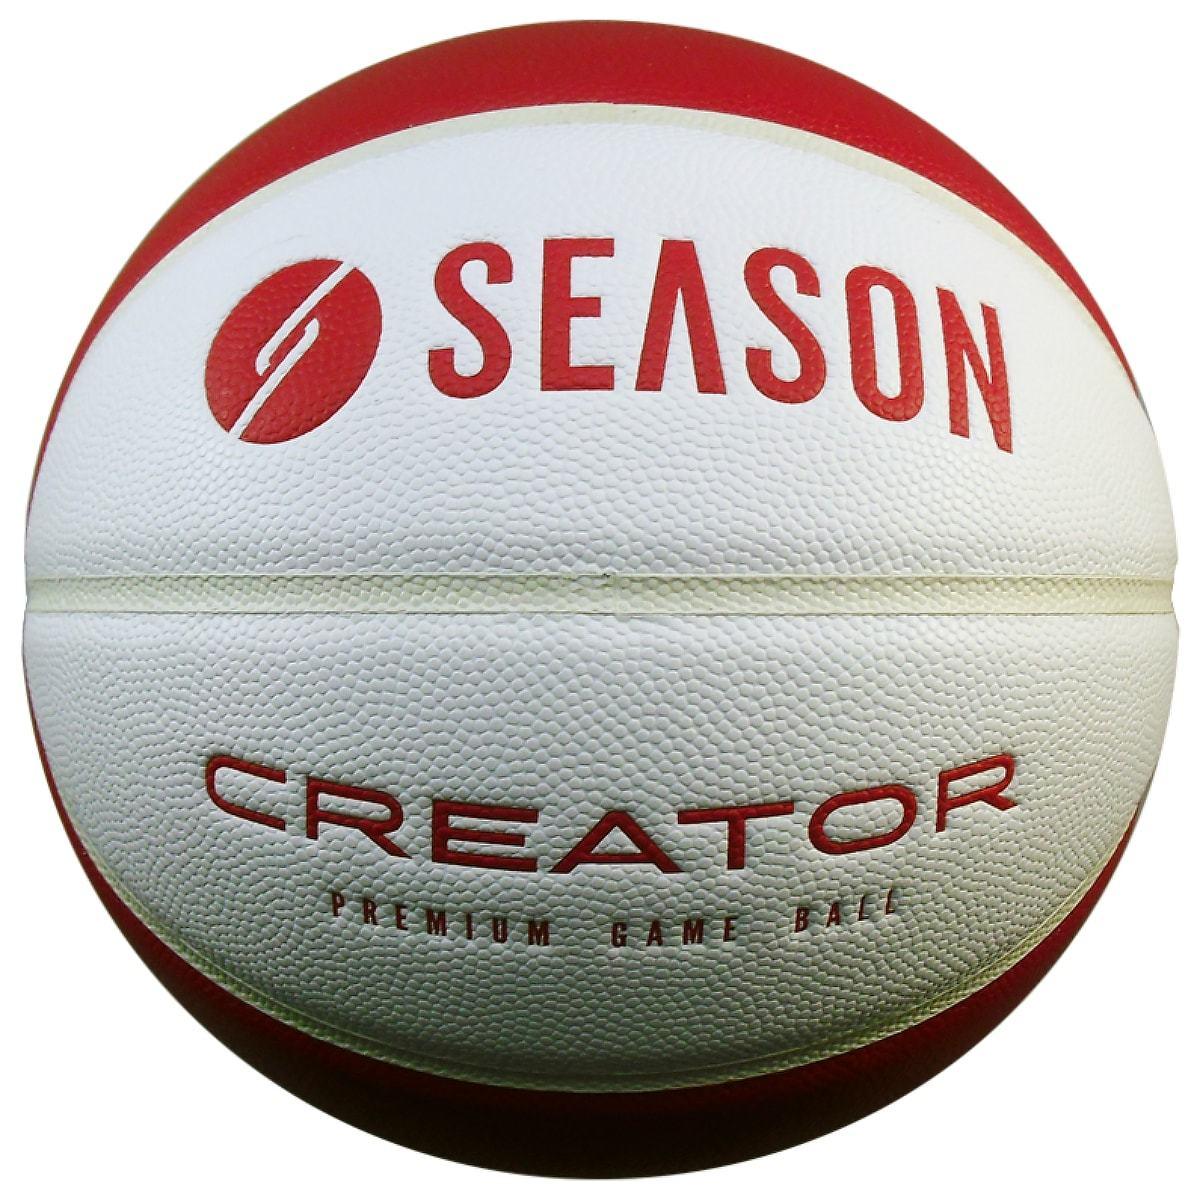 Red White Ball Logo - SEASON Creator Premium Game Official Basketball